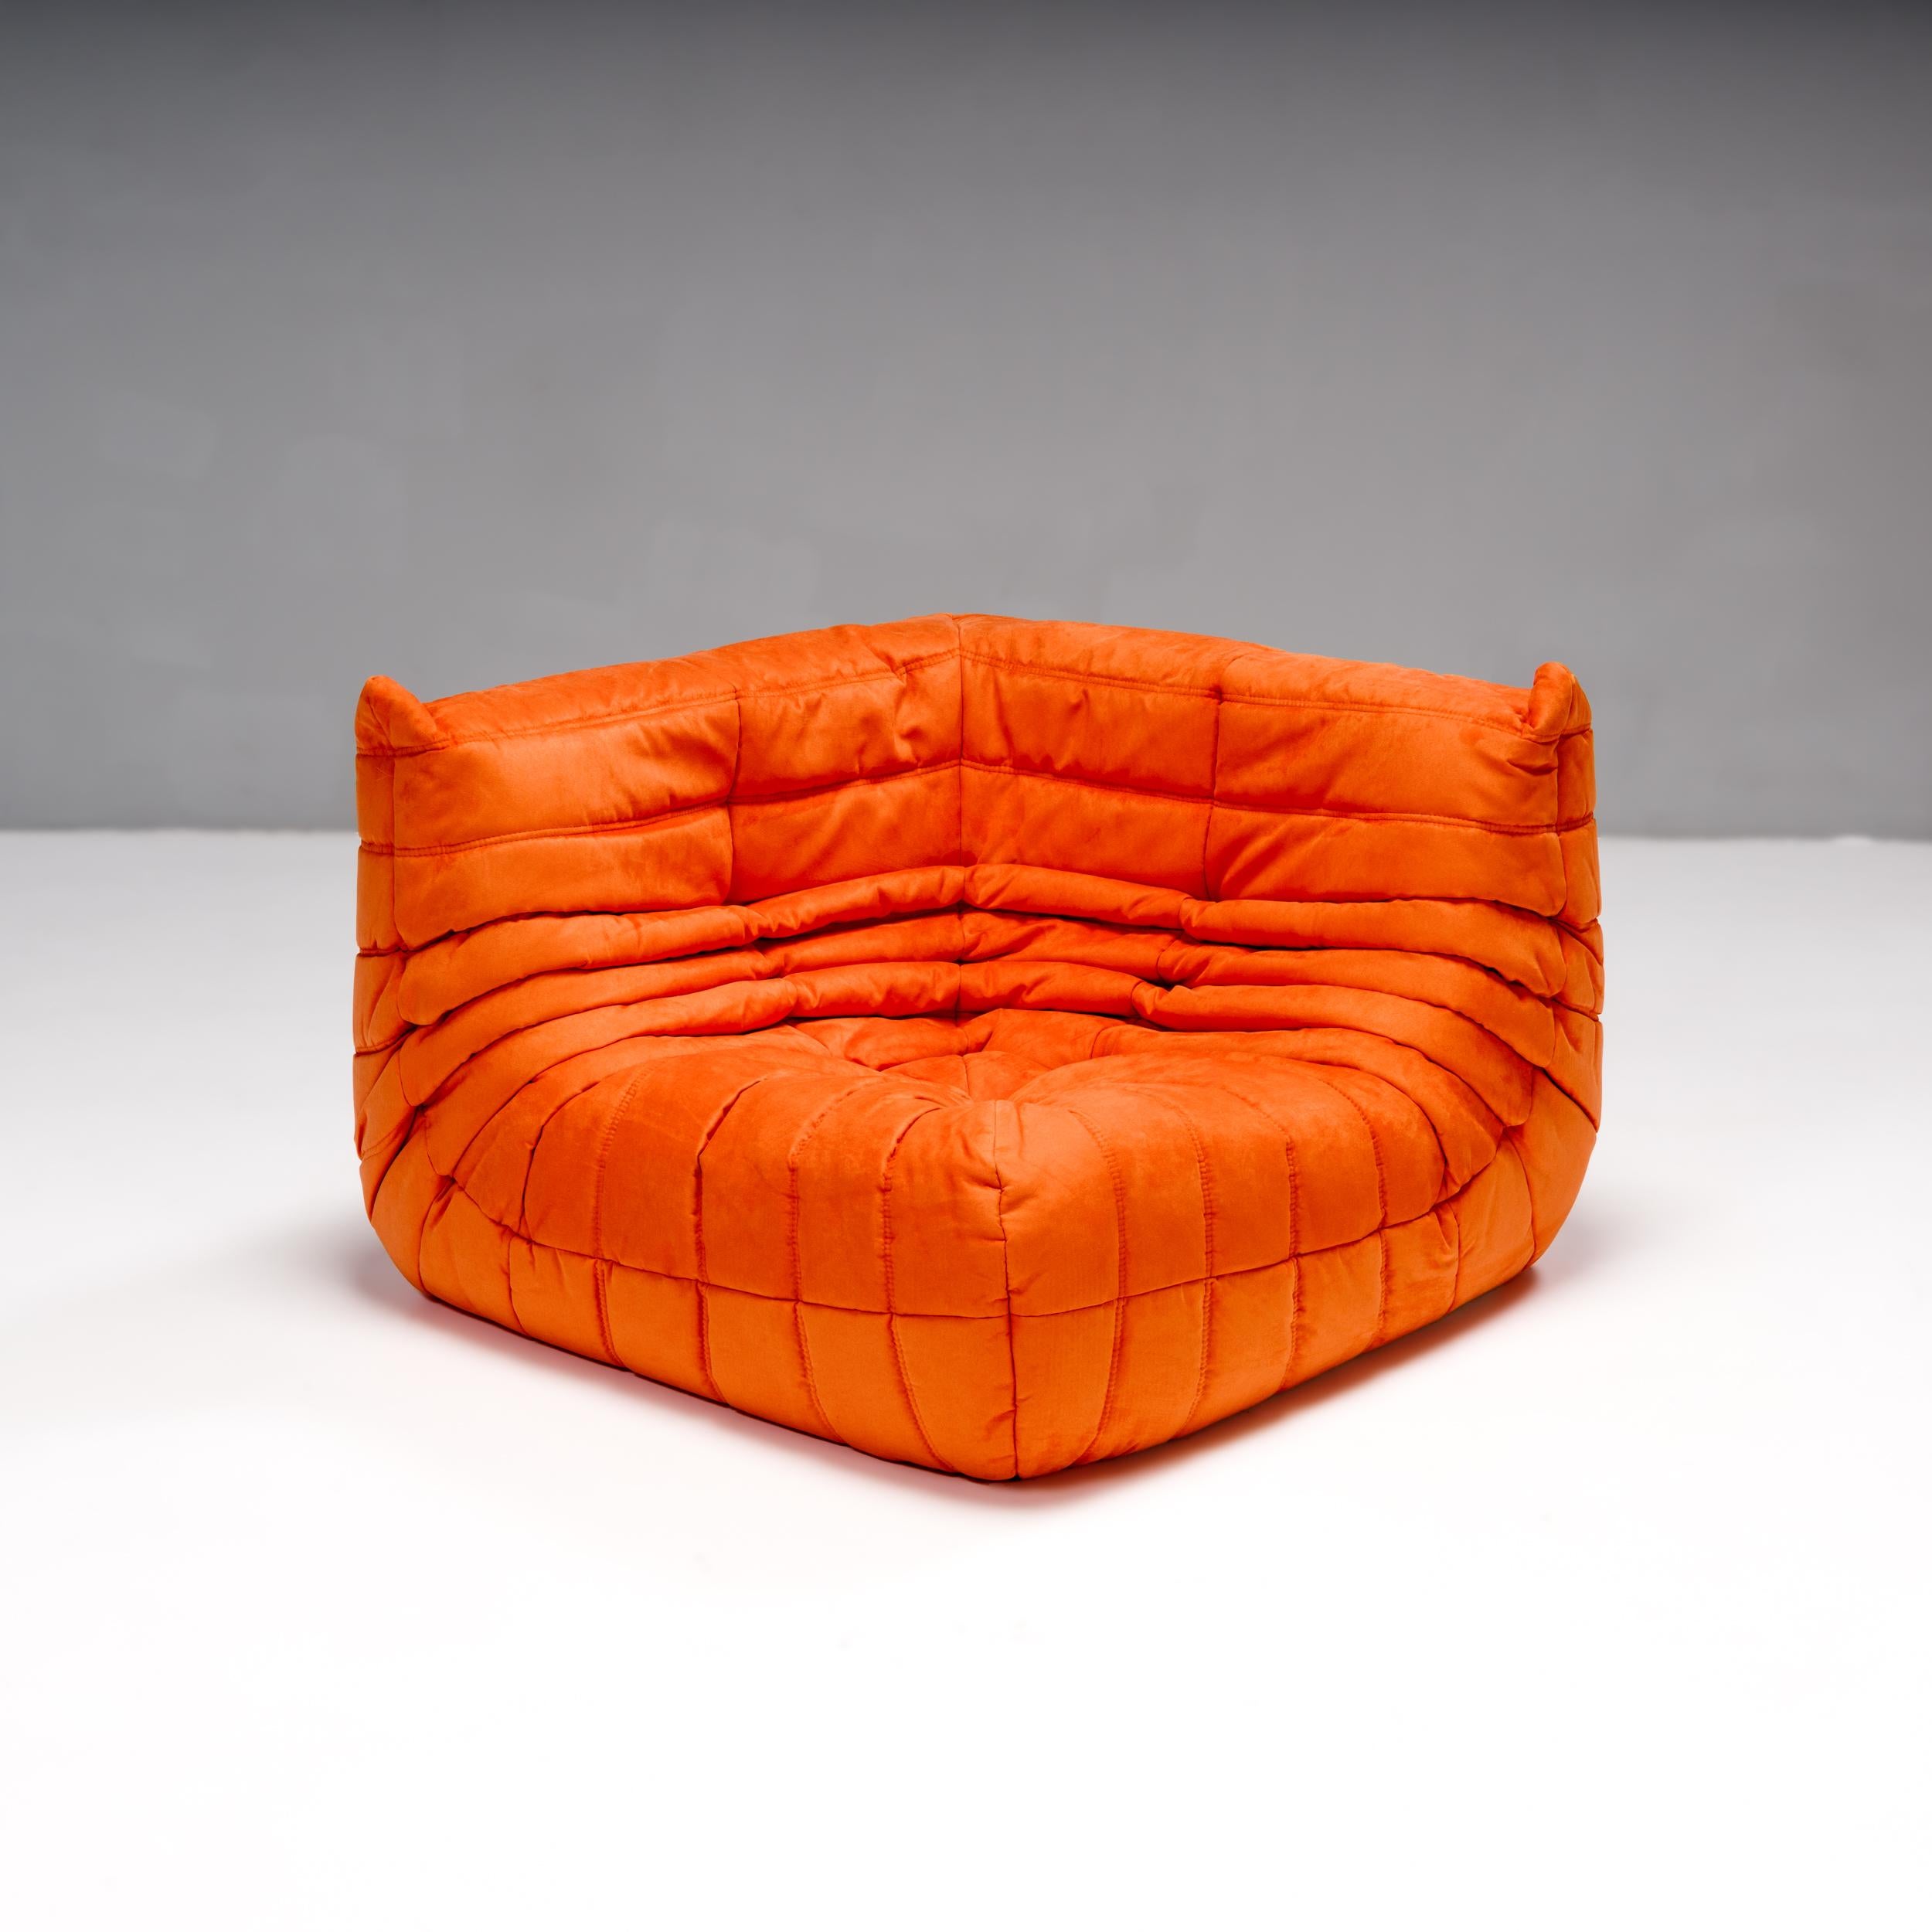 Michel Ducaroy for Ligne Roset Orange Togo Modular Sofas, Set of 5 In Good Condition For Sale In London, GB